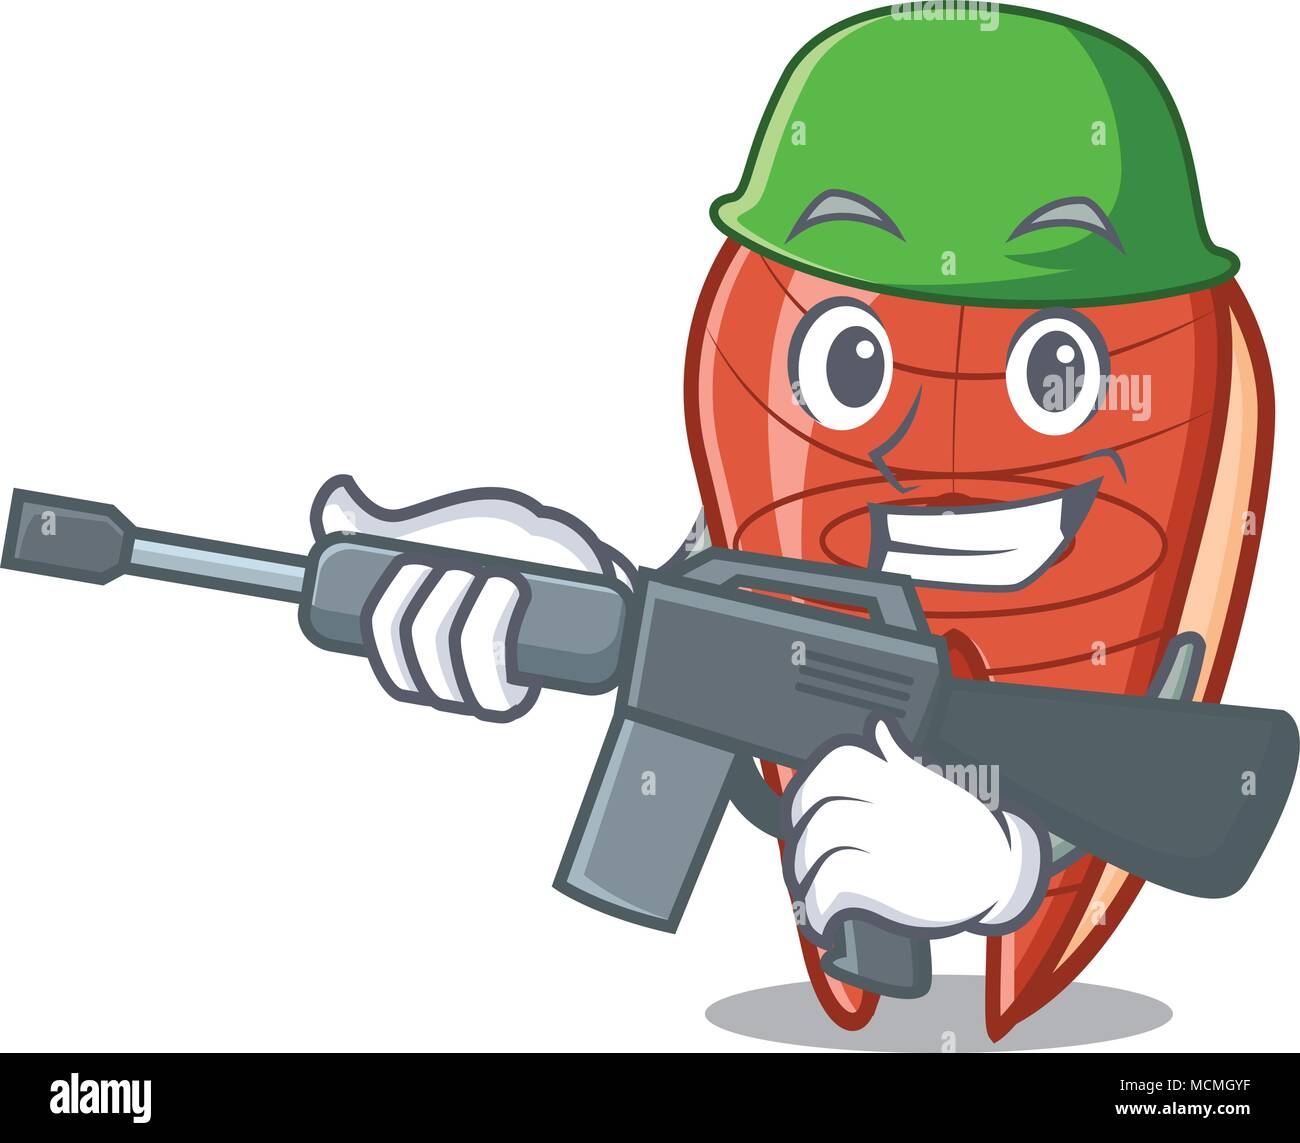 Army fish slice character cartoon vector illustration Stock Vector